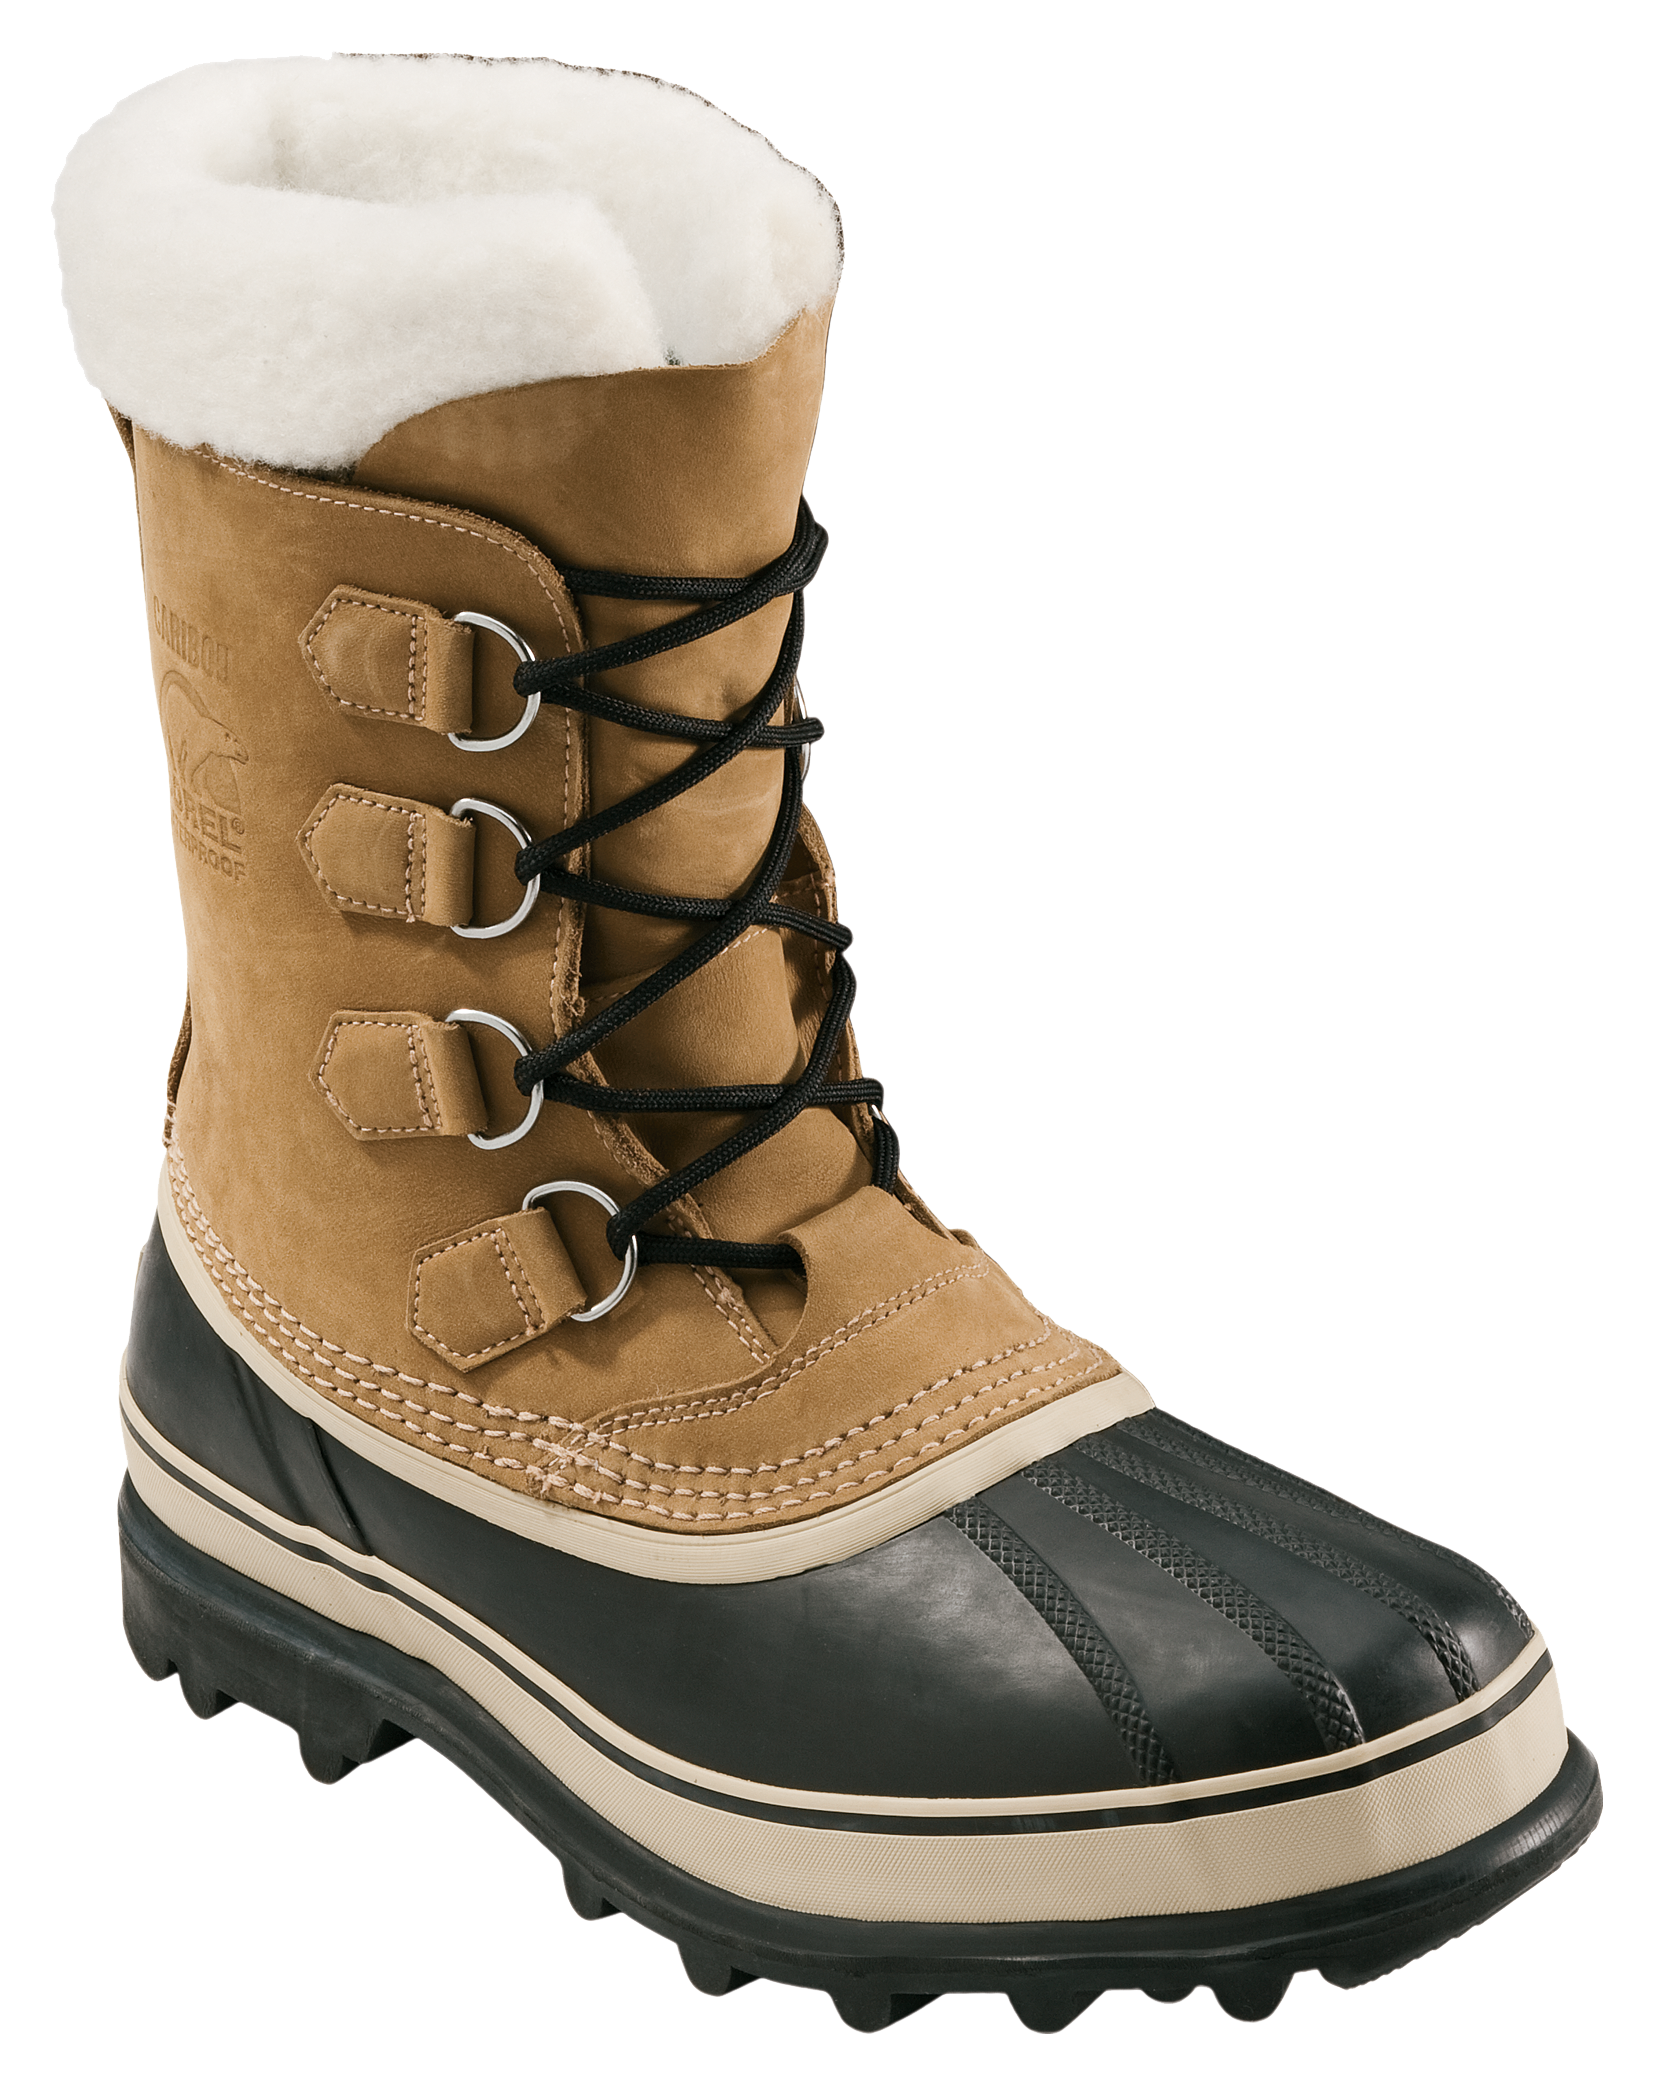 Sorel Caribou Pac Boots for Men